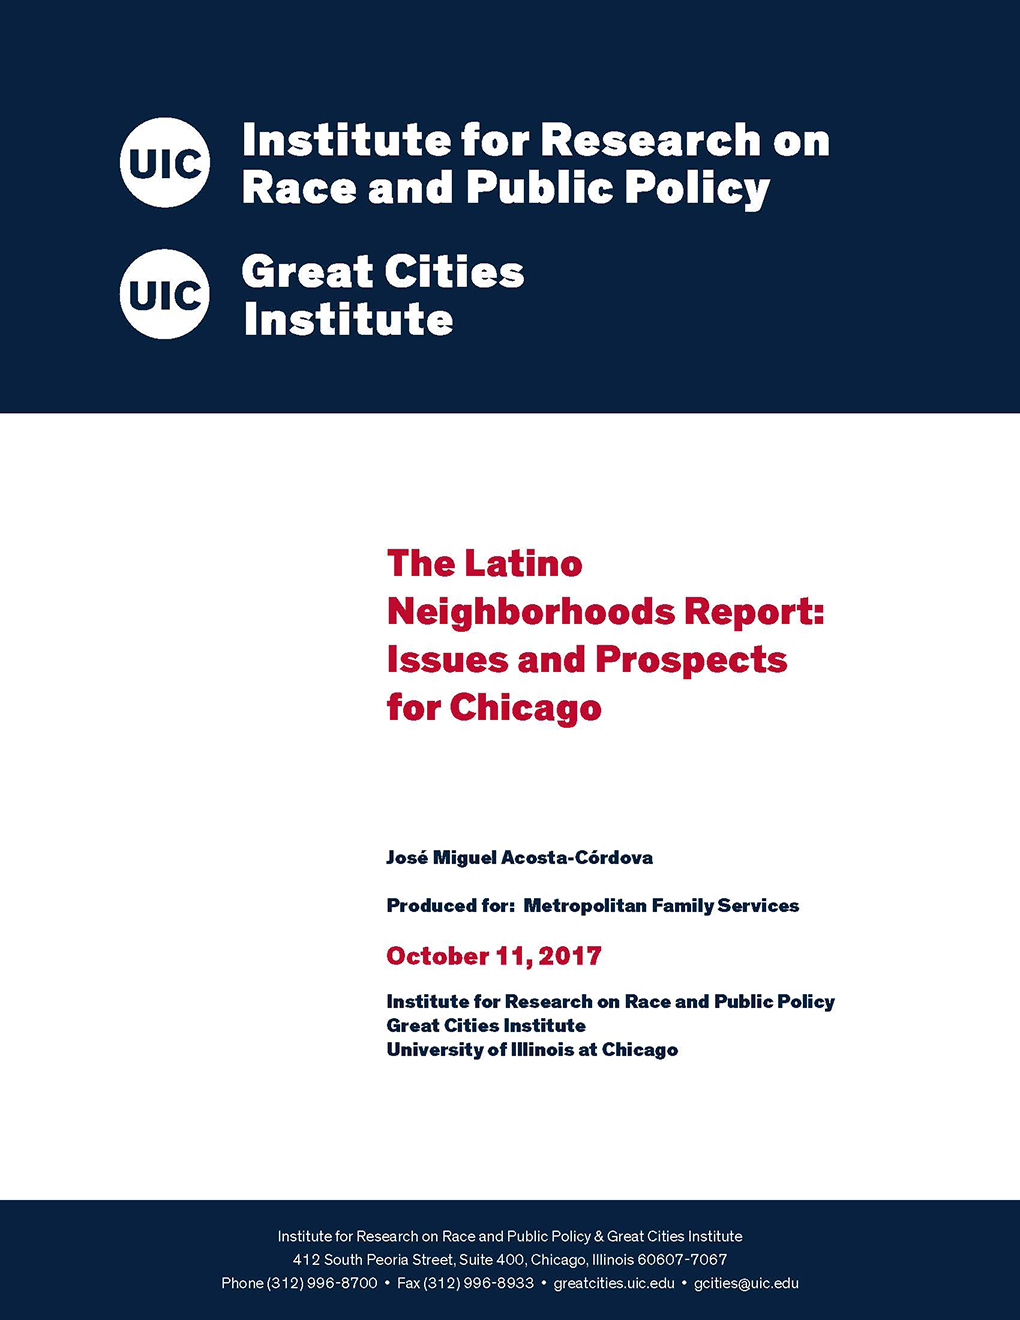 GCI IRRPP Latino Neighborhoods Report cover